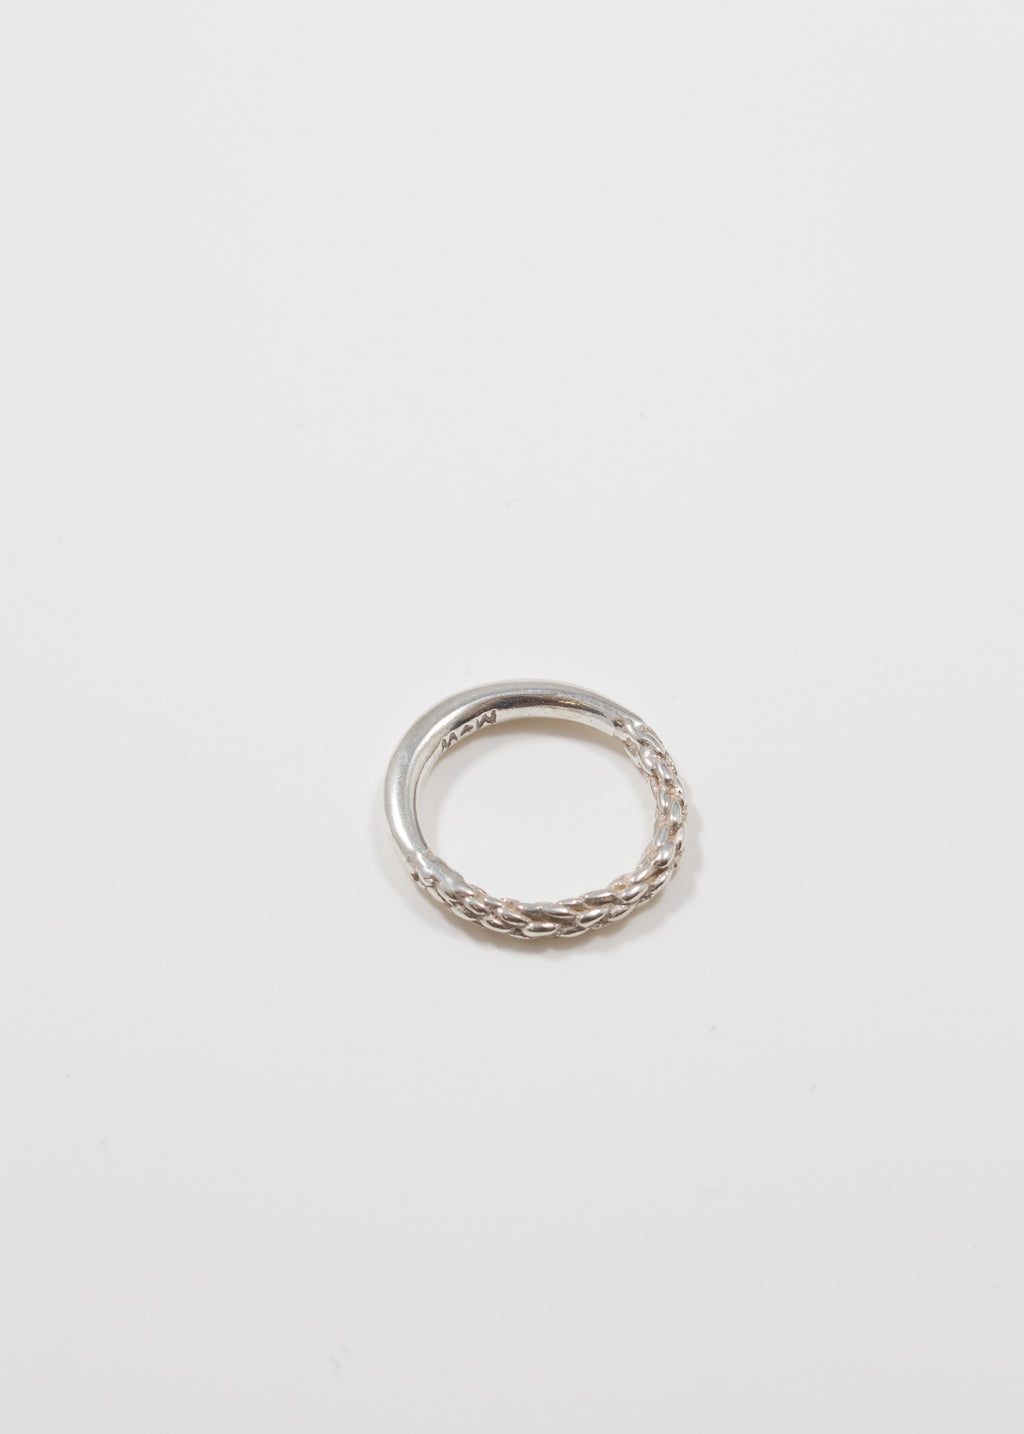 MIRIT WEINSTOCK - Silver half&half braid ring